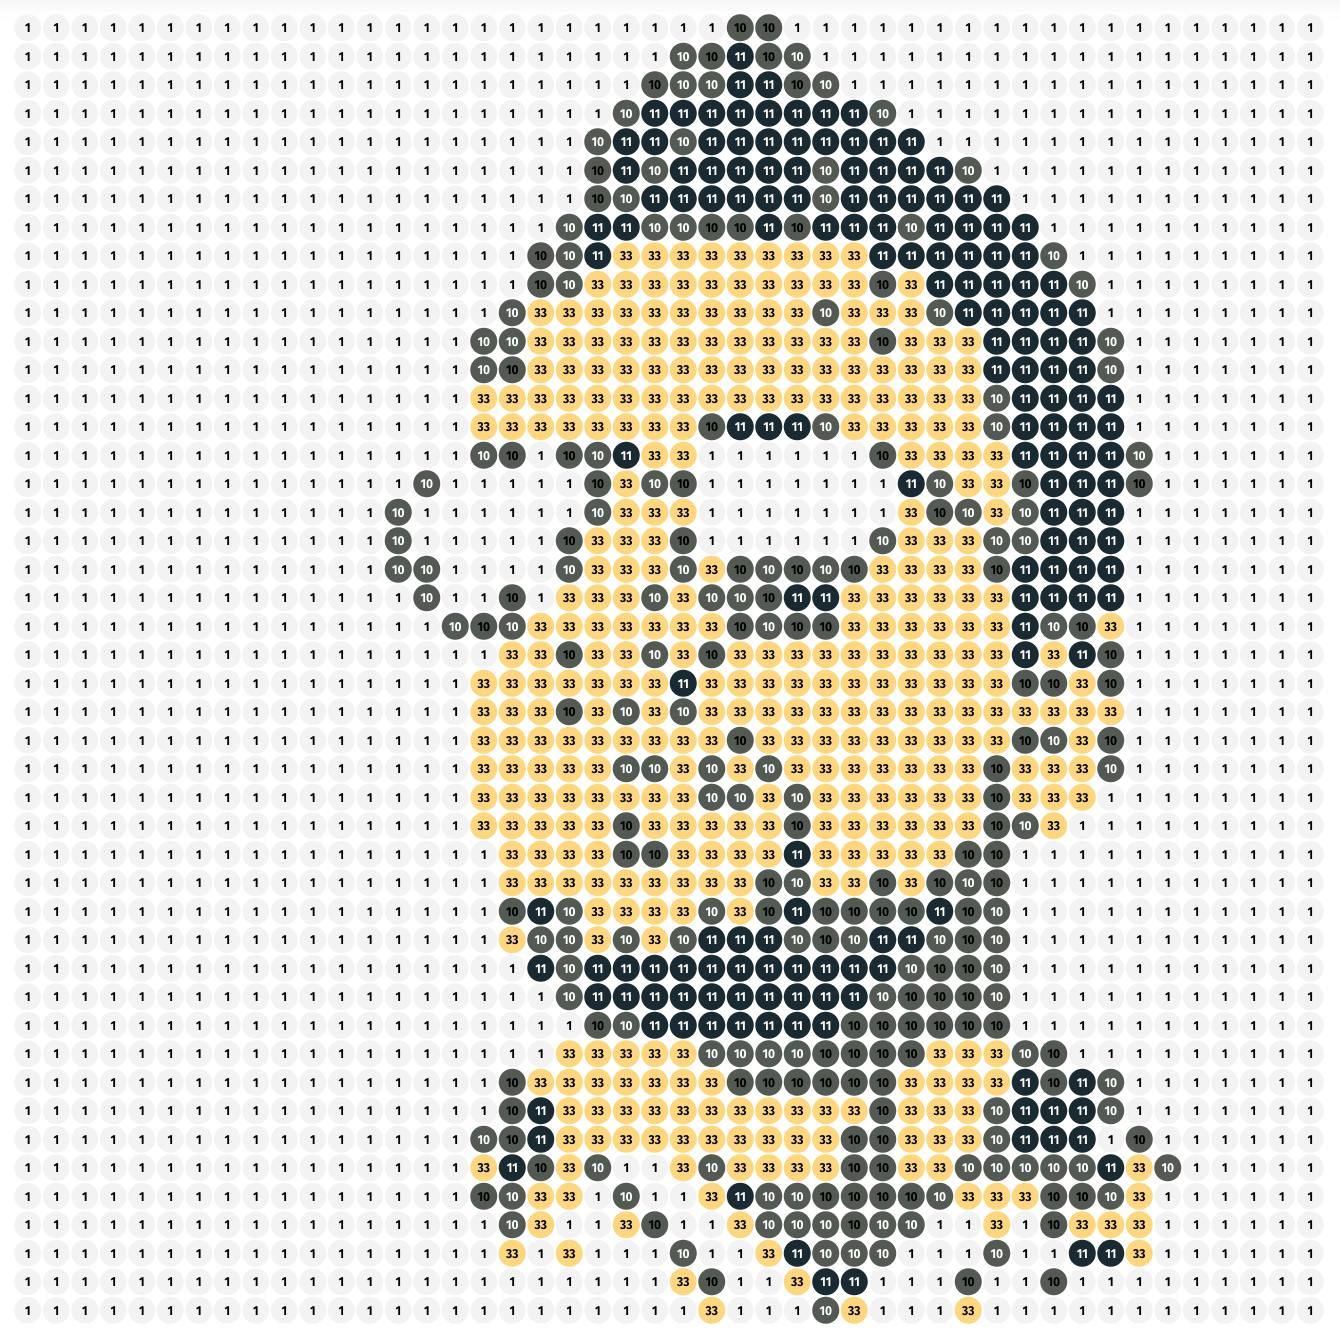 LEGO Portrait online maker